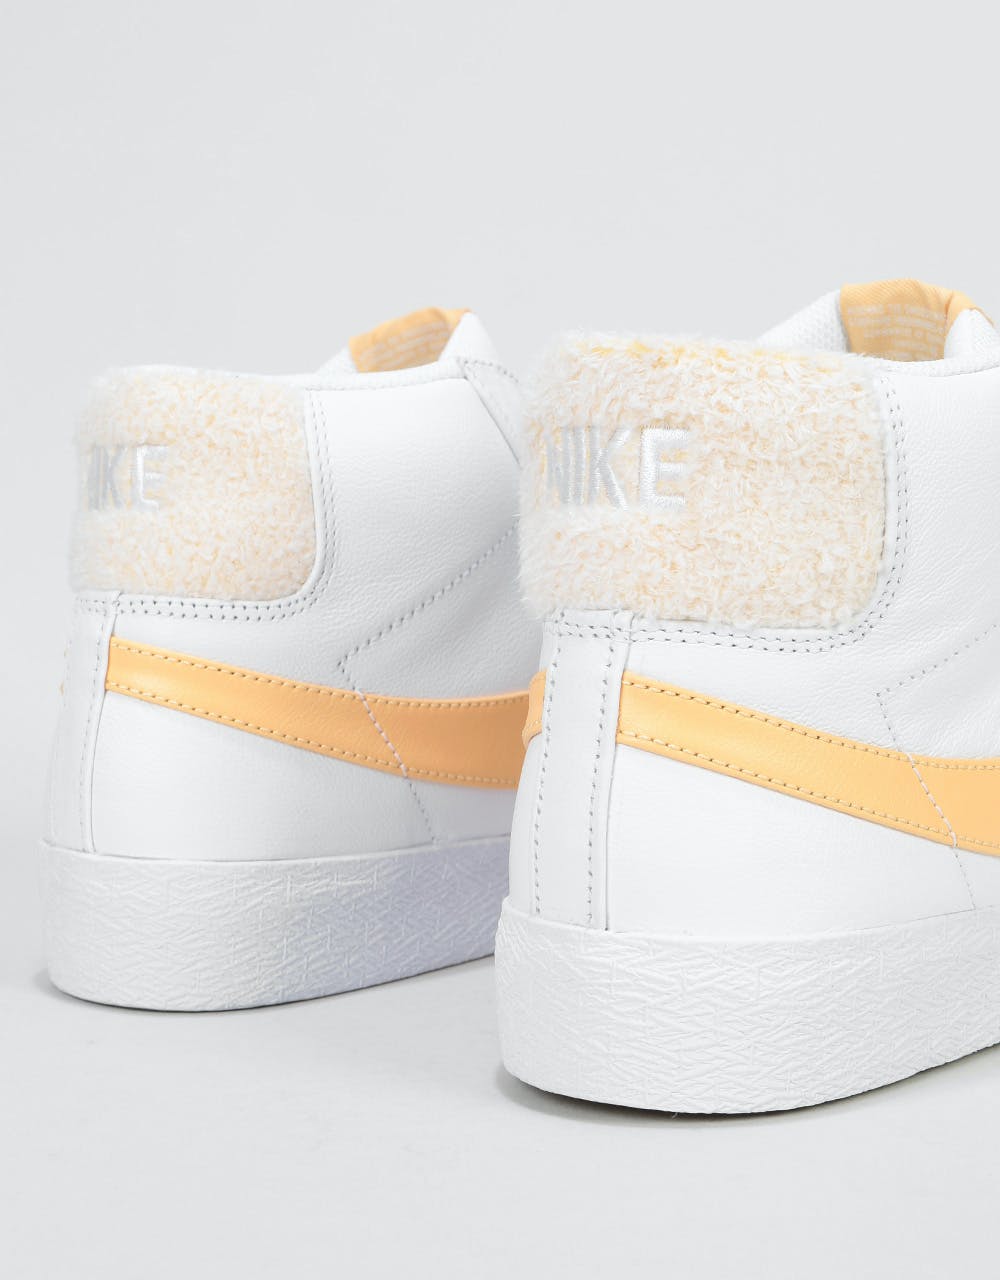 Nike SB Zoom Blazer Mid Premium Skate Shoes - White/Celestial Gold